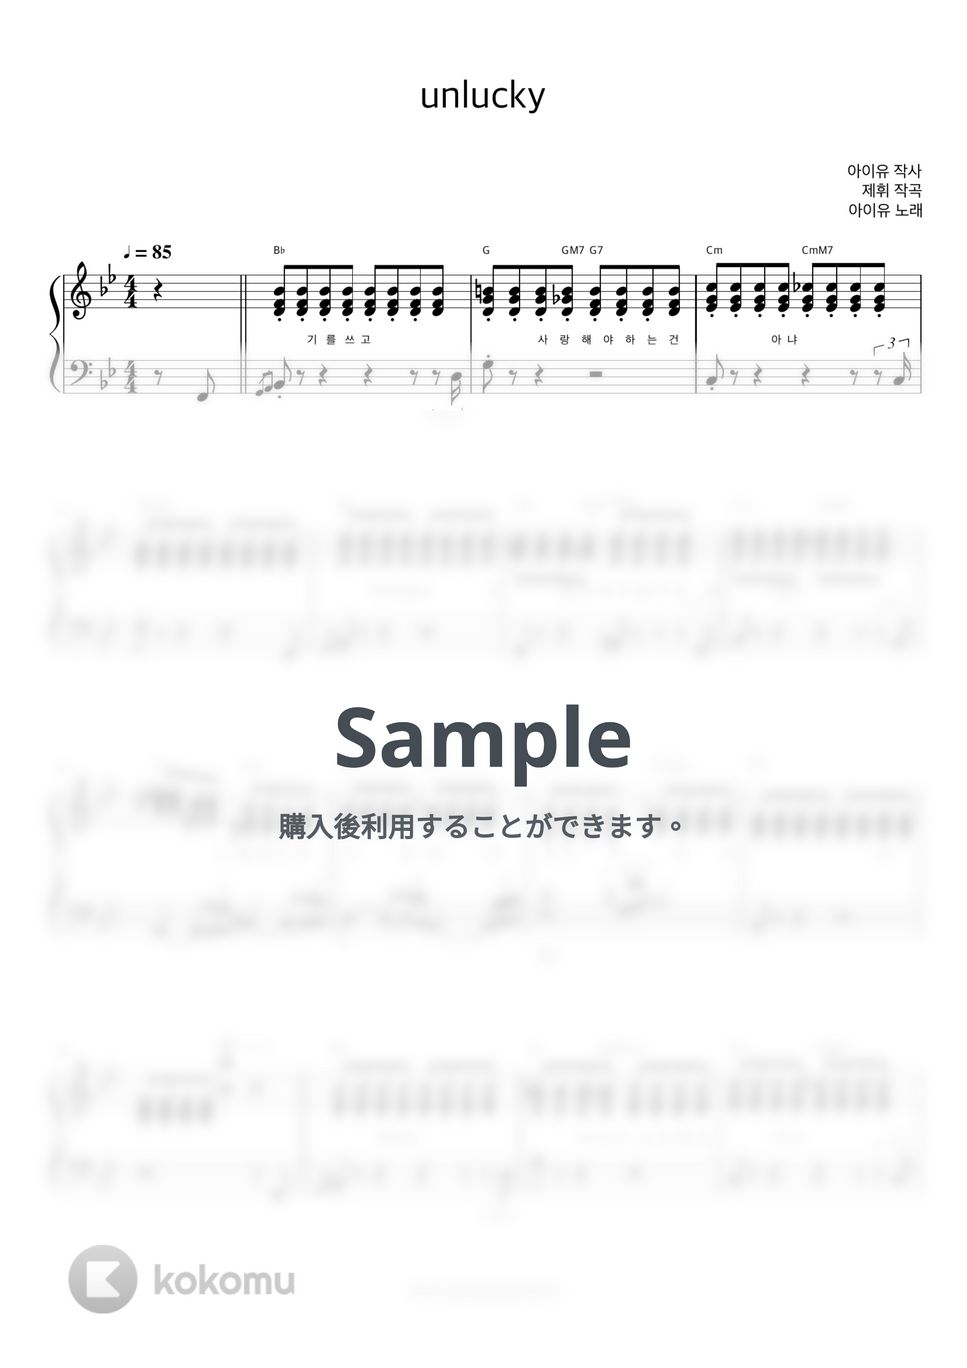 IU - Unlucky (ピアノ伴奏楽譜) by 피아노정류장